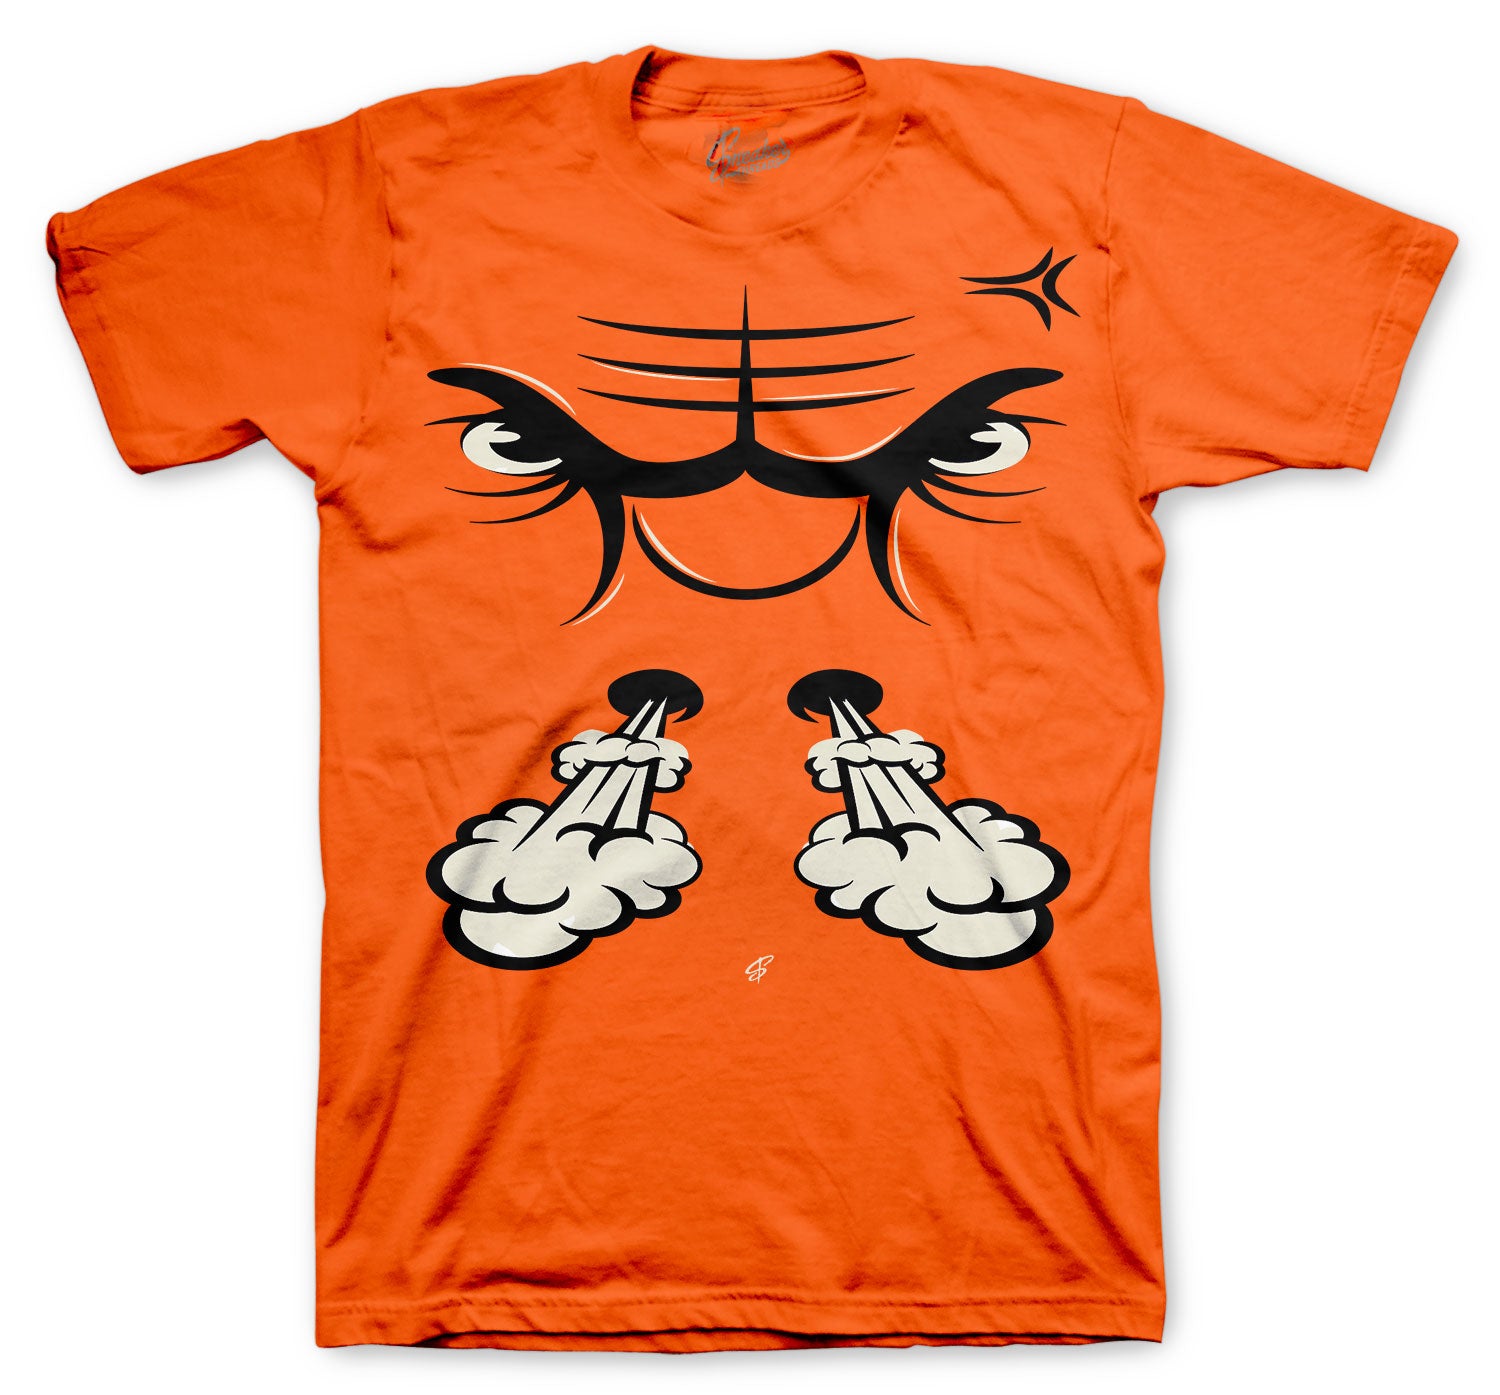 Retro 1 Electro Orange Shirt - Raging Face - Orange